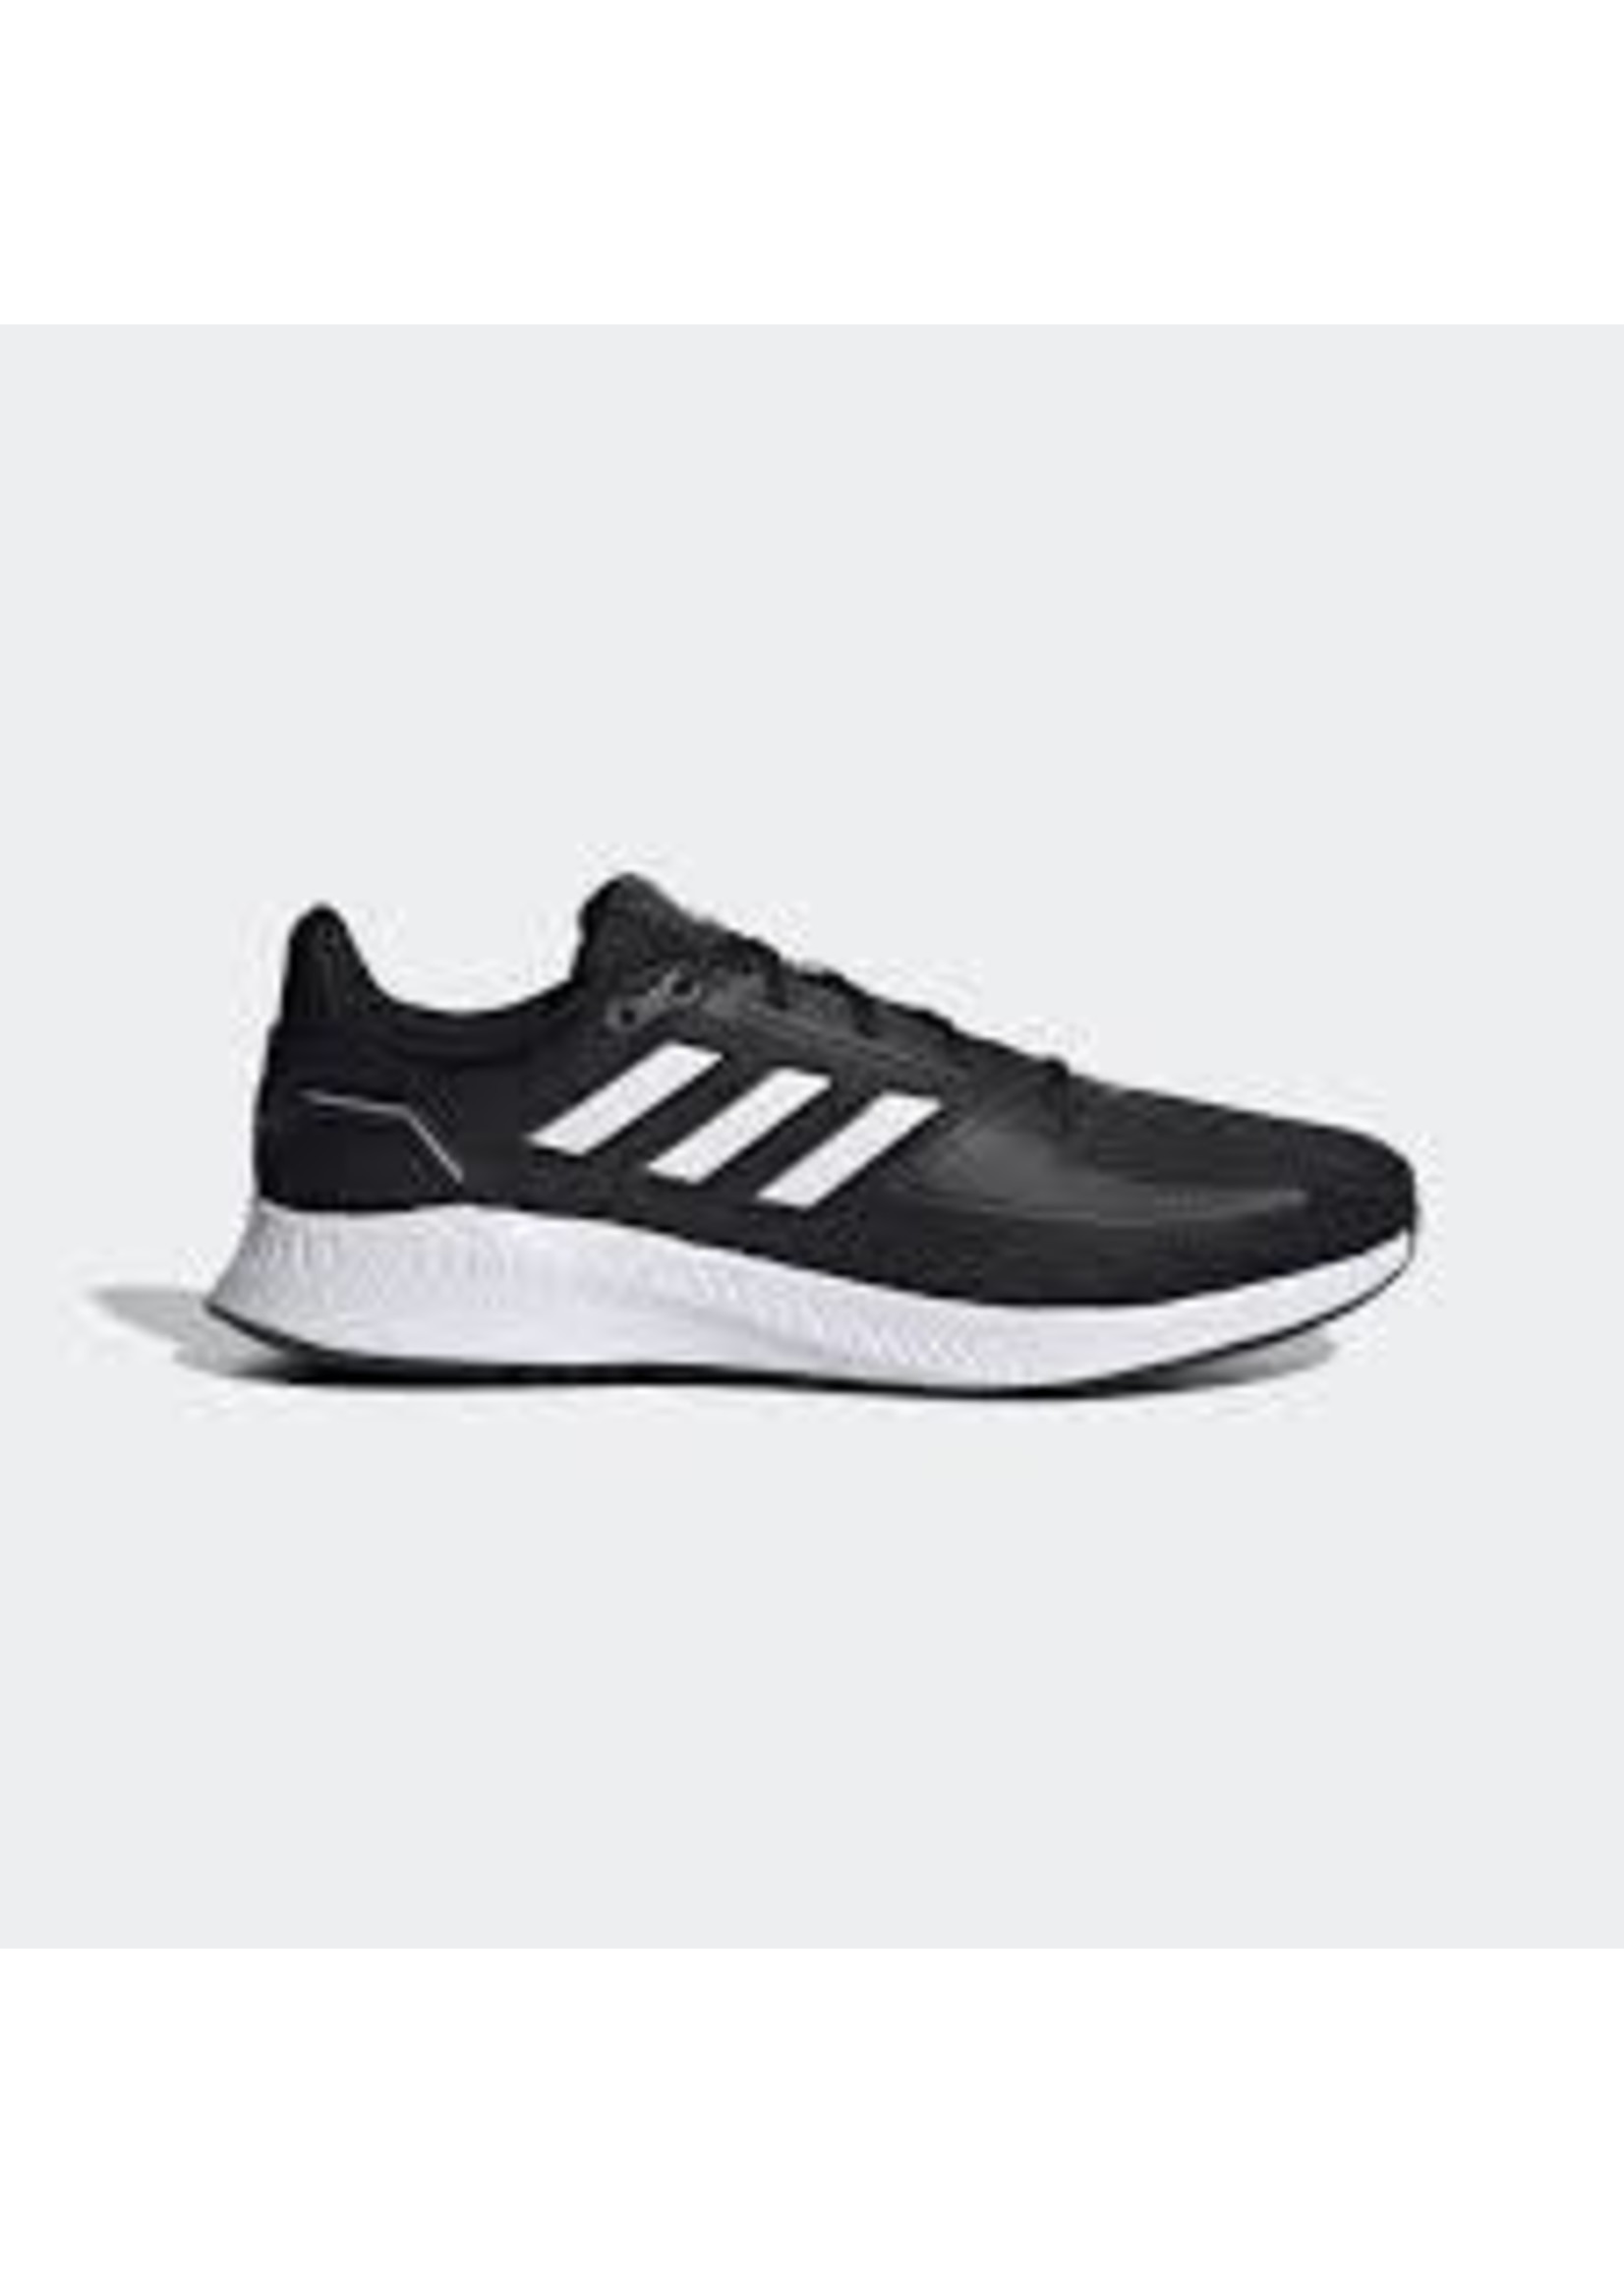 Adidas Adidas Run Falcon 2.0 Junior Running Shoe - Black/White